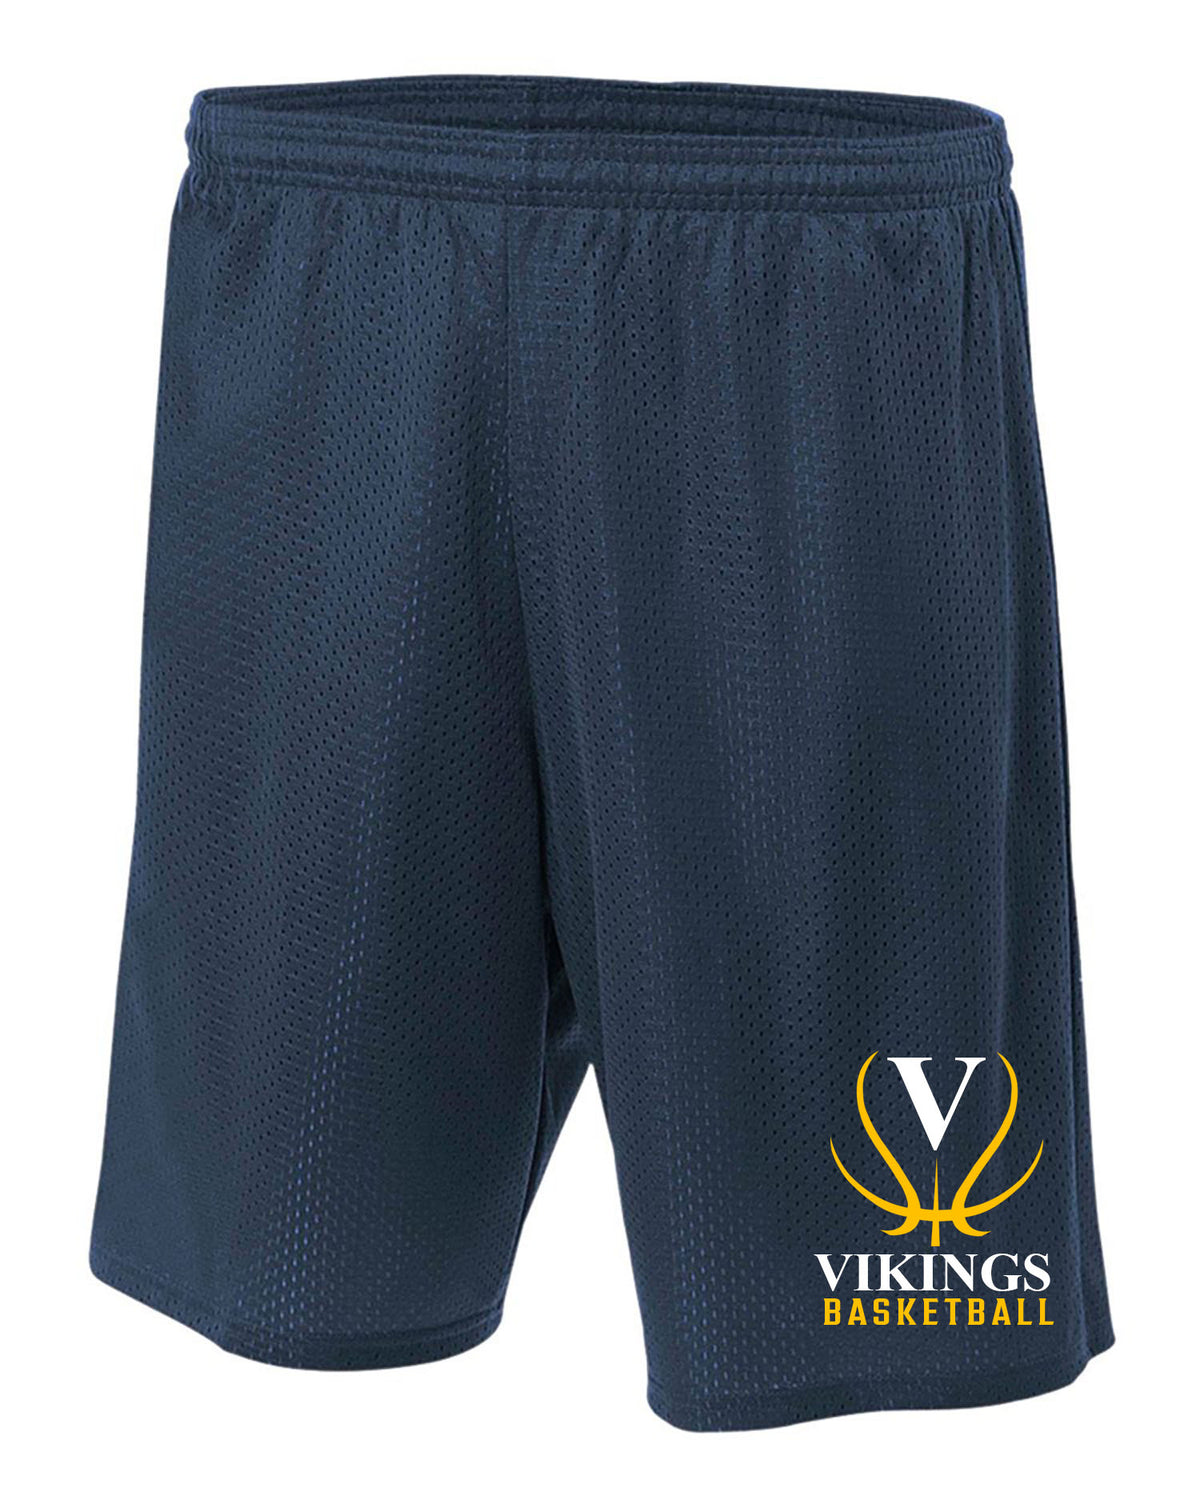 Vikings Basketball Design 3 Mesh Shorts